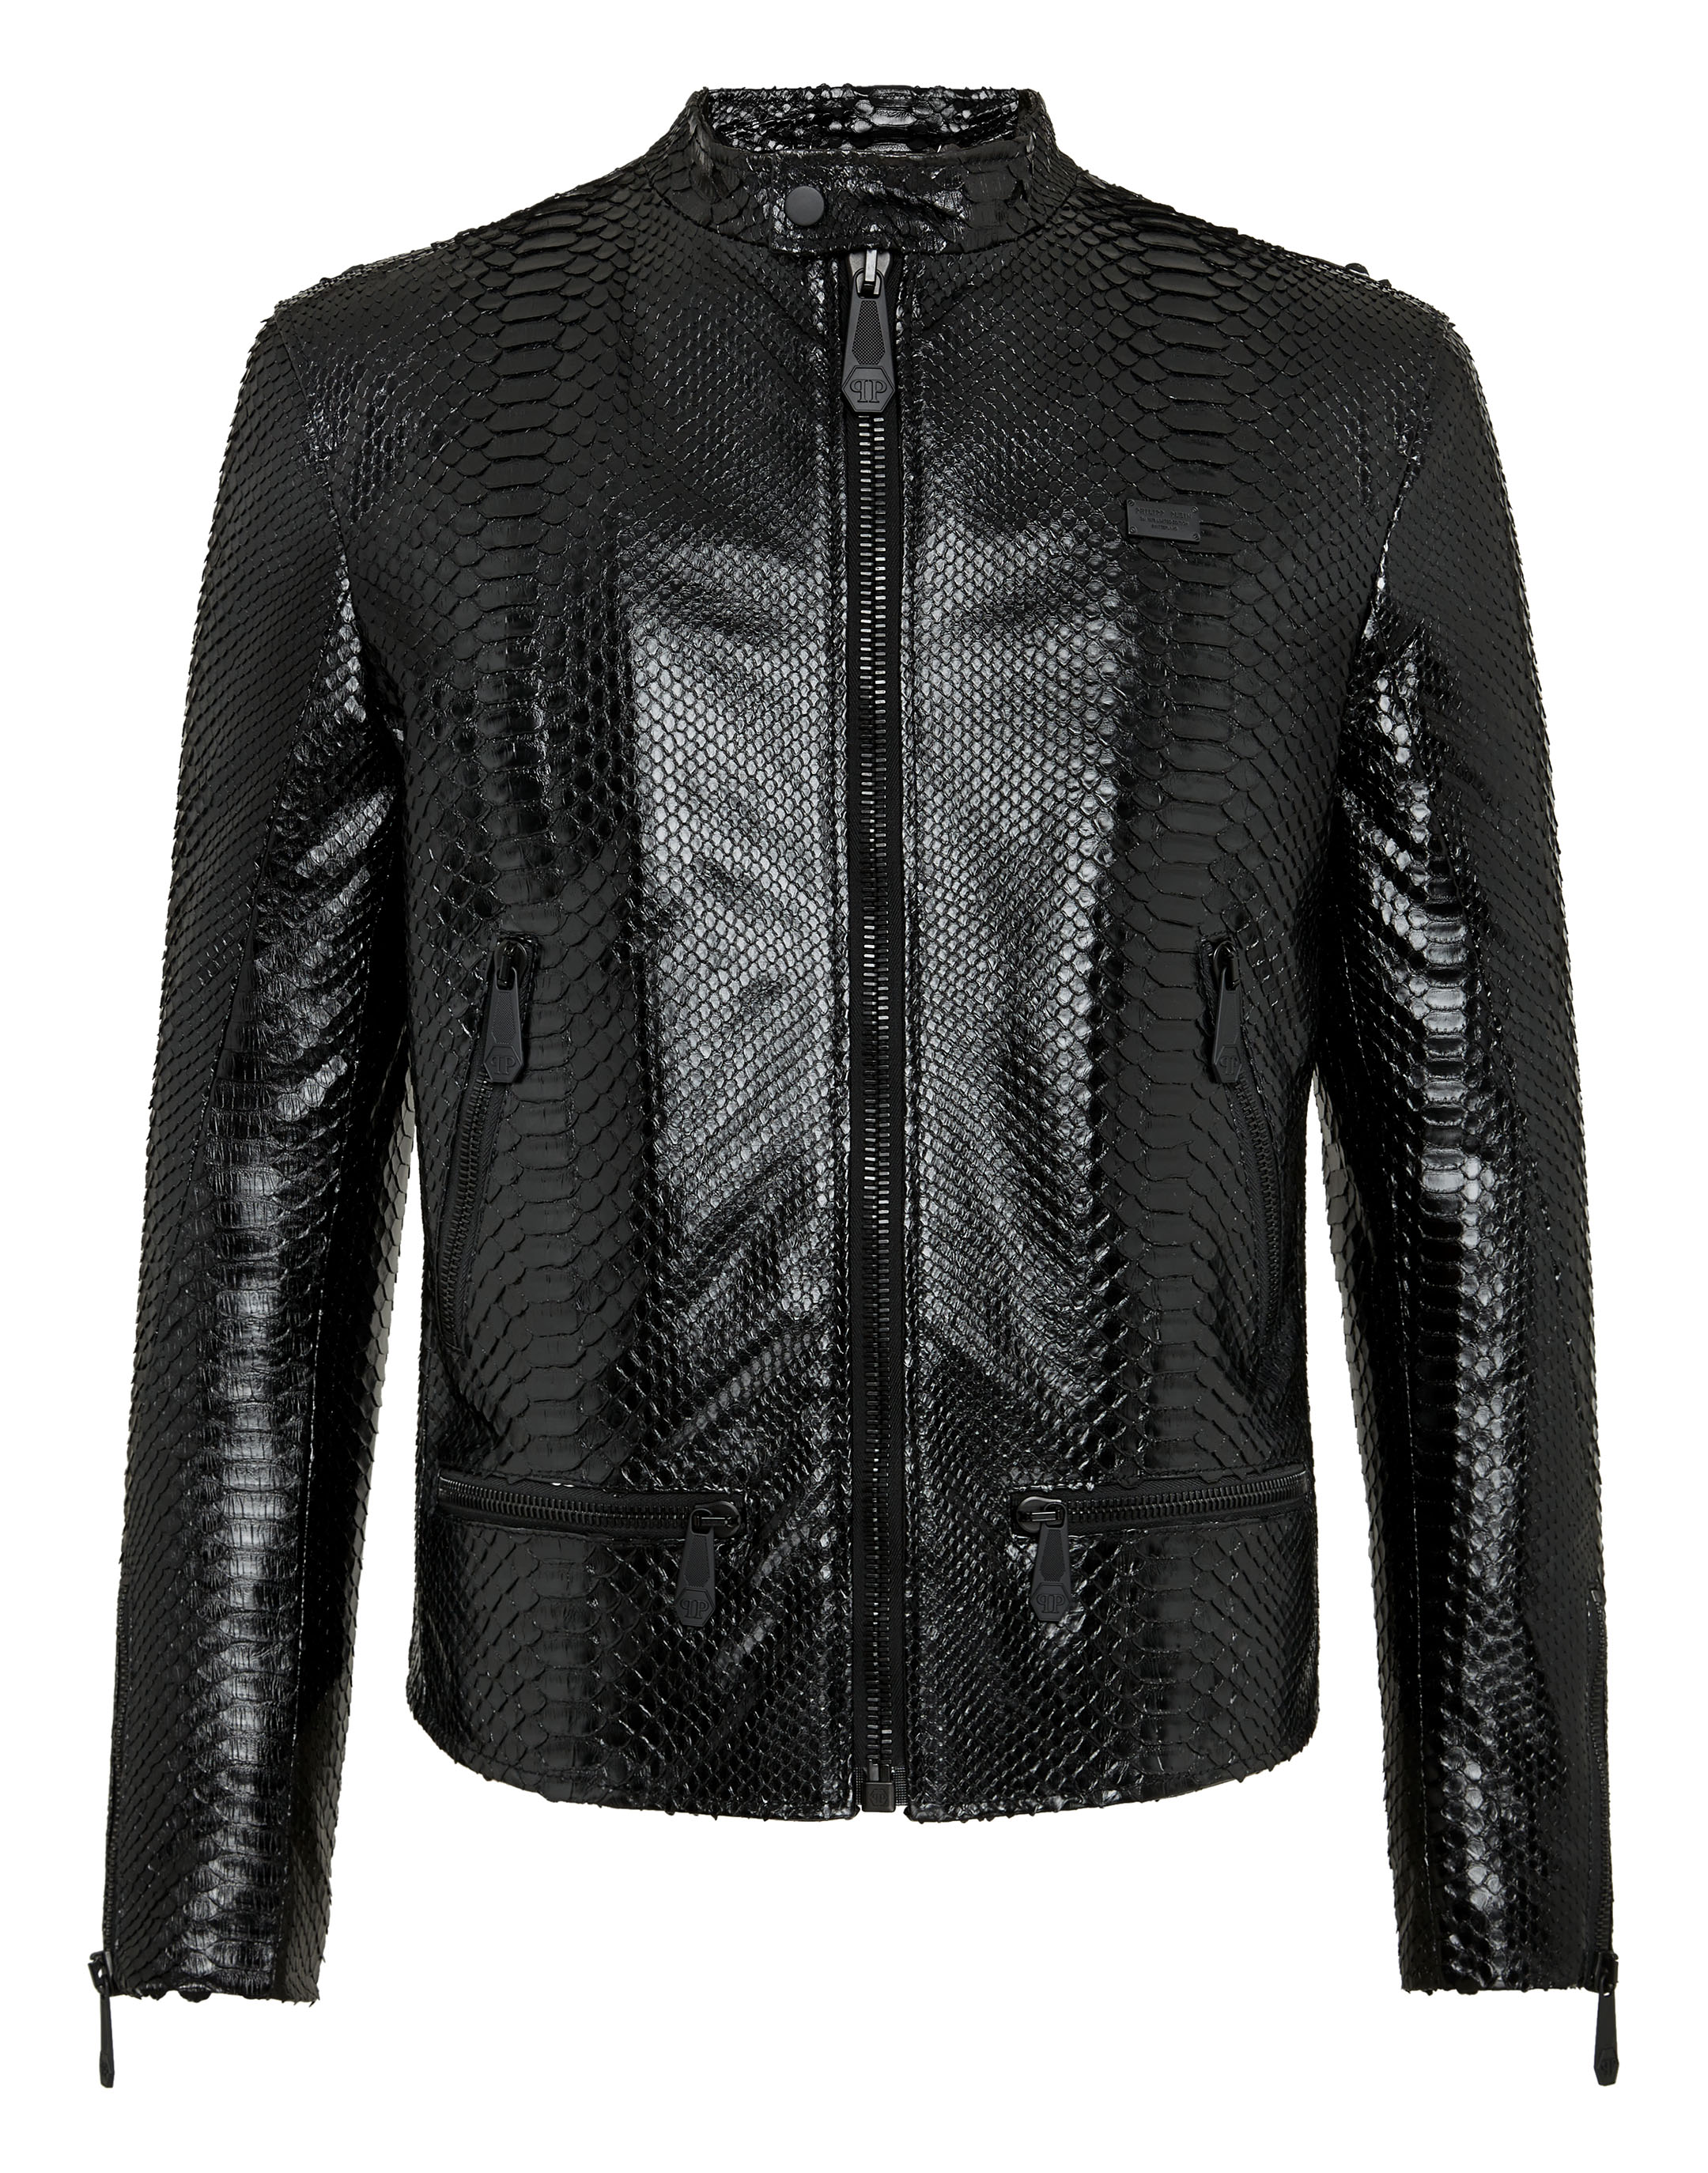 philipp plein homme limited edition jacket